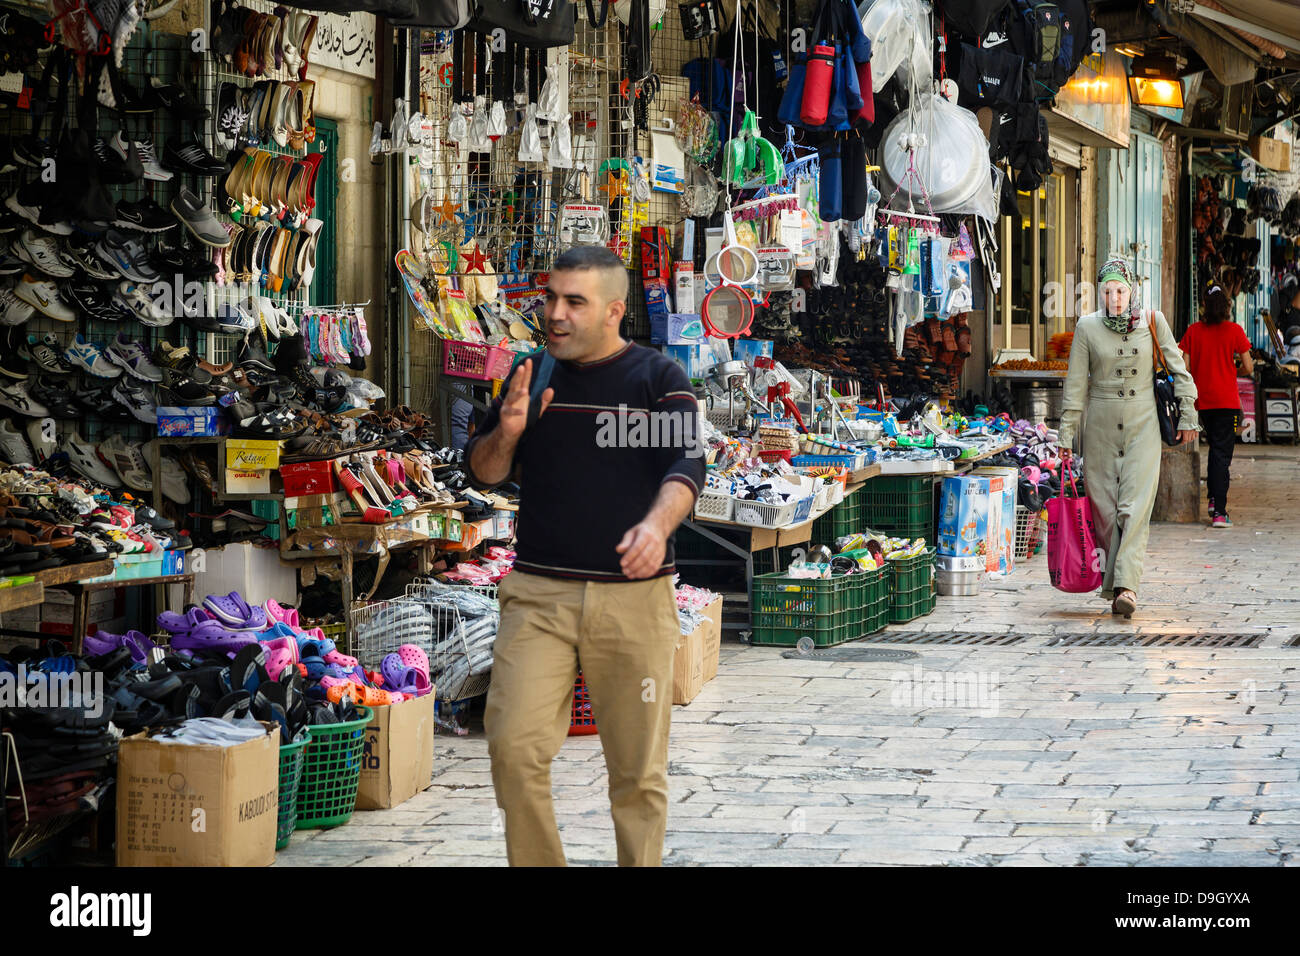 Market in the muslim quarter in old city, Jerusalem, Israel. Stock Photo